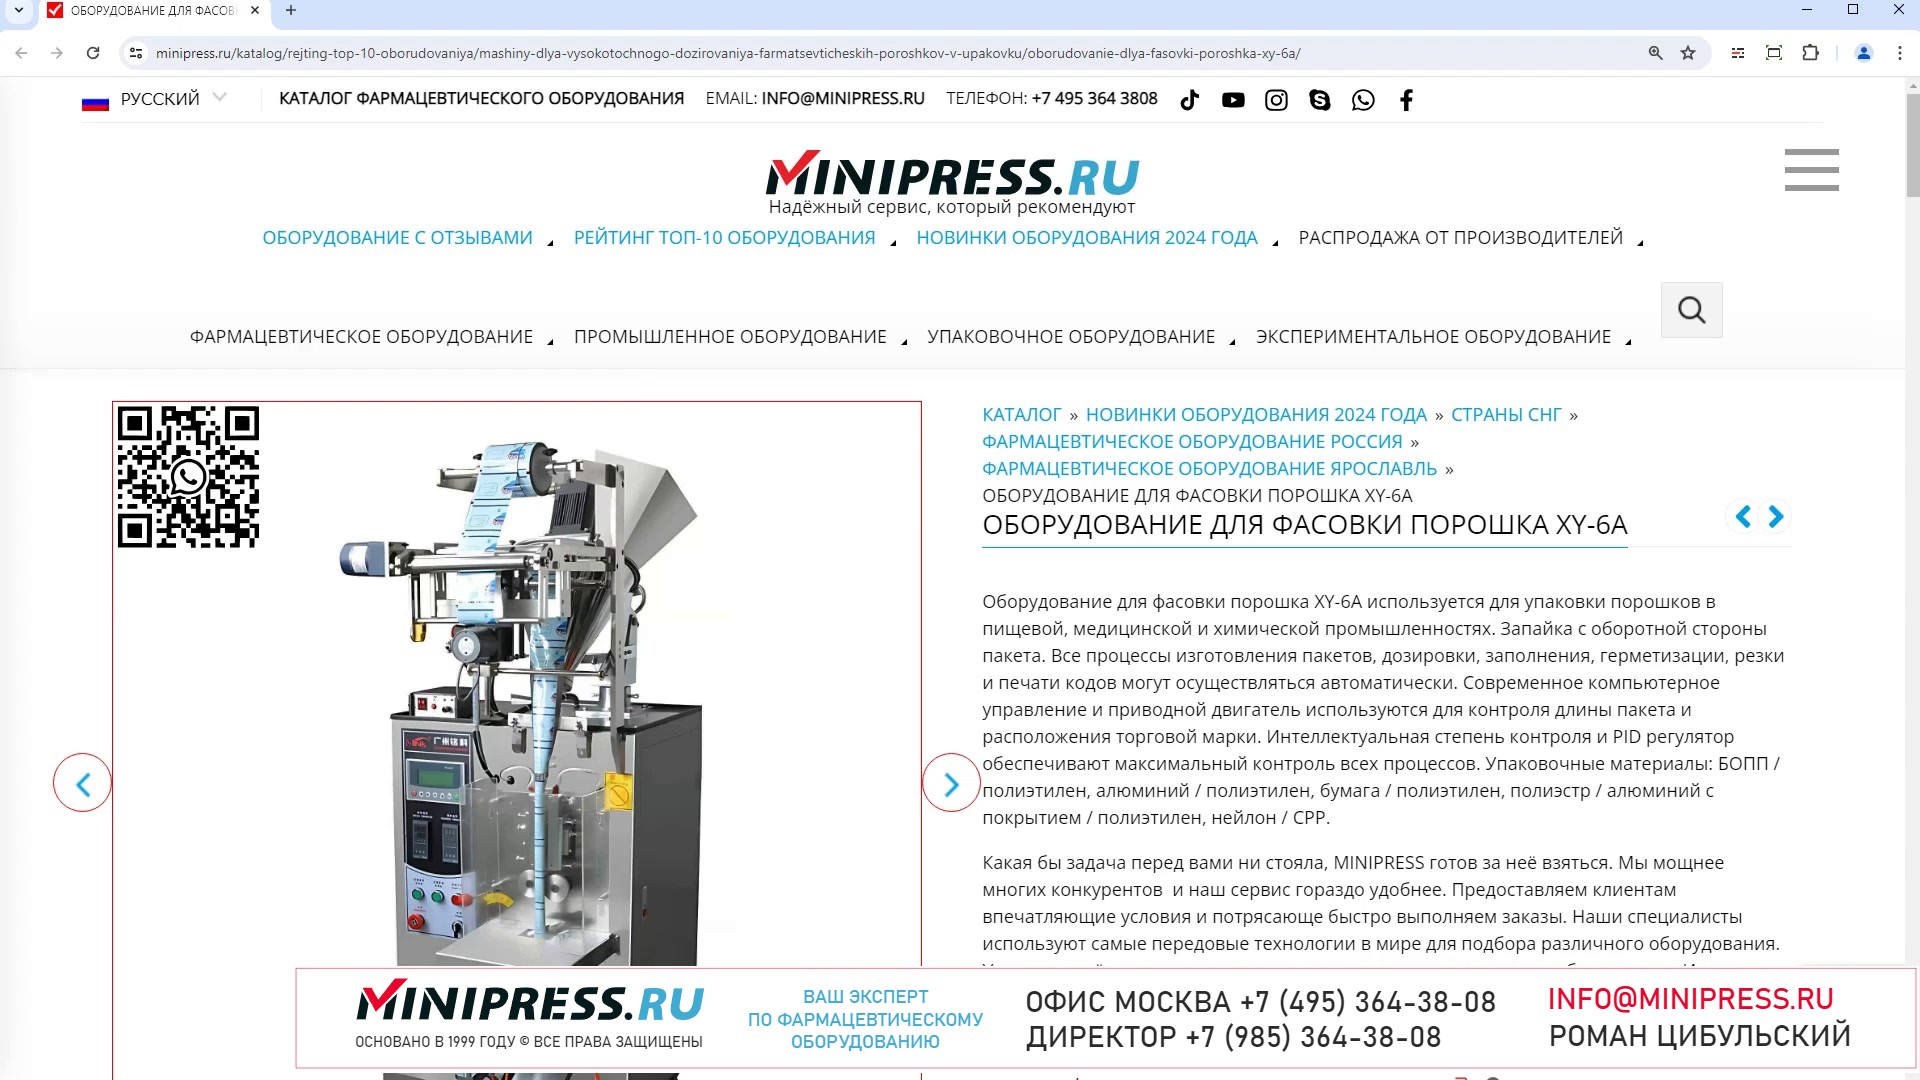 Minipress.ru Оборудование для фасовки порошка XY-6A